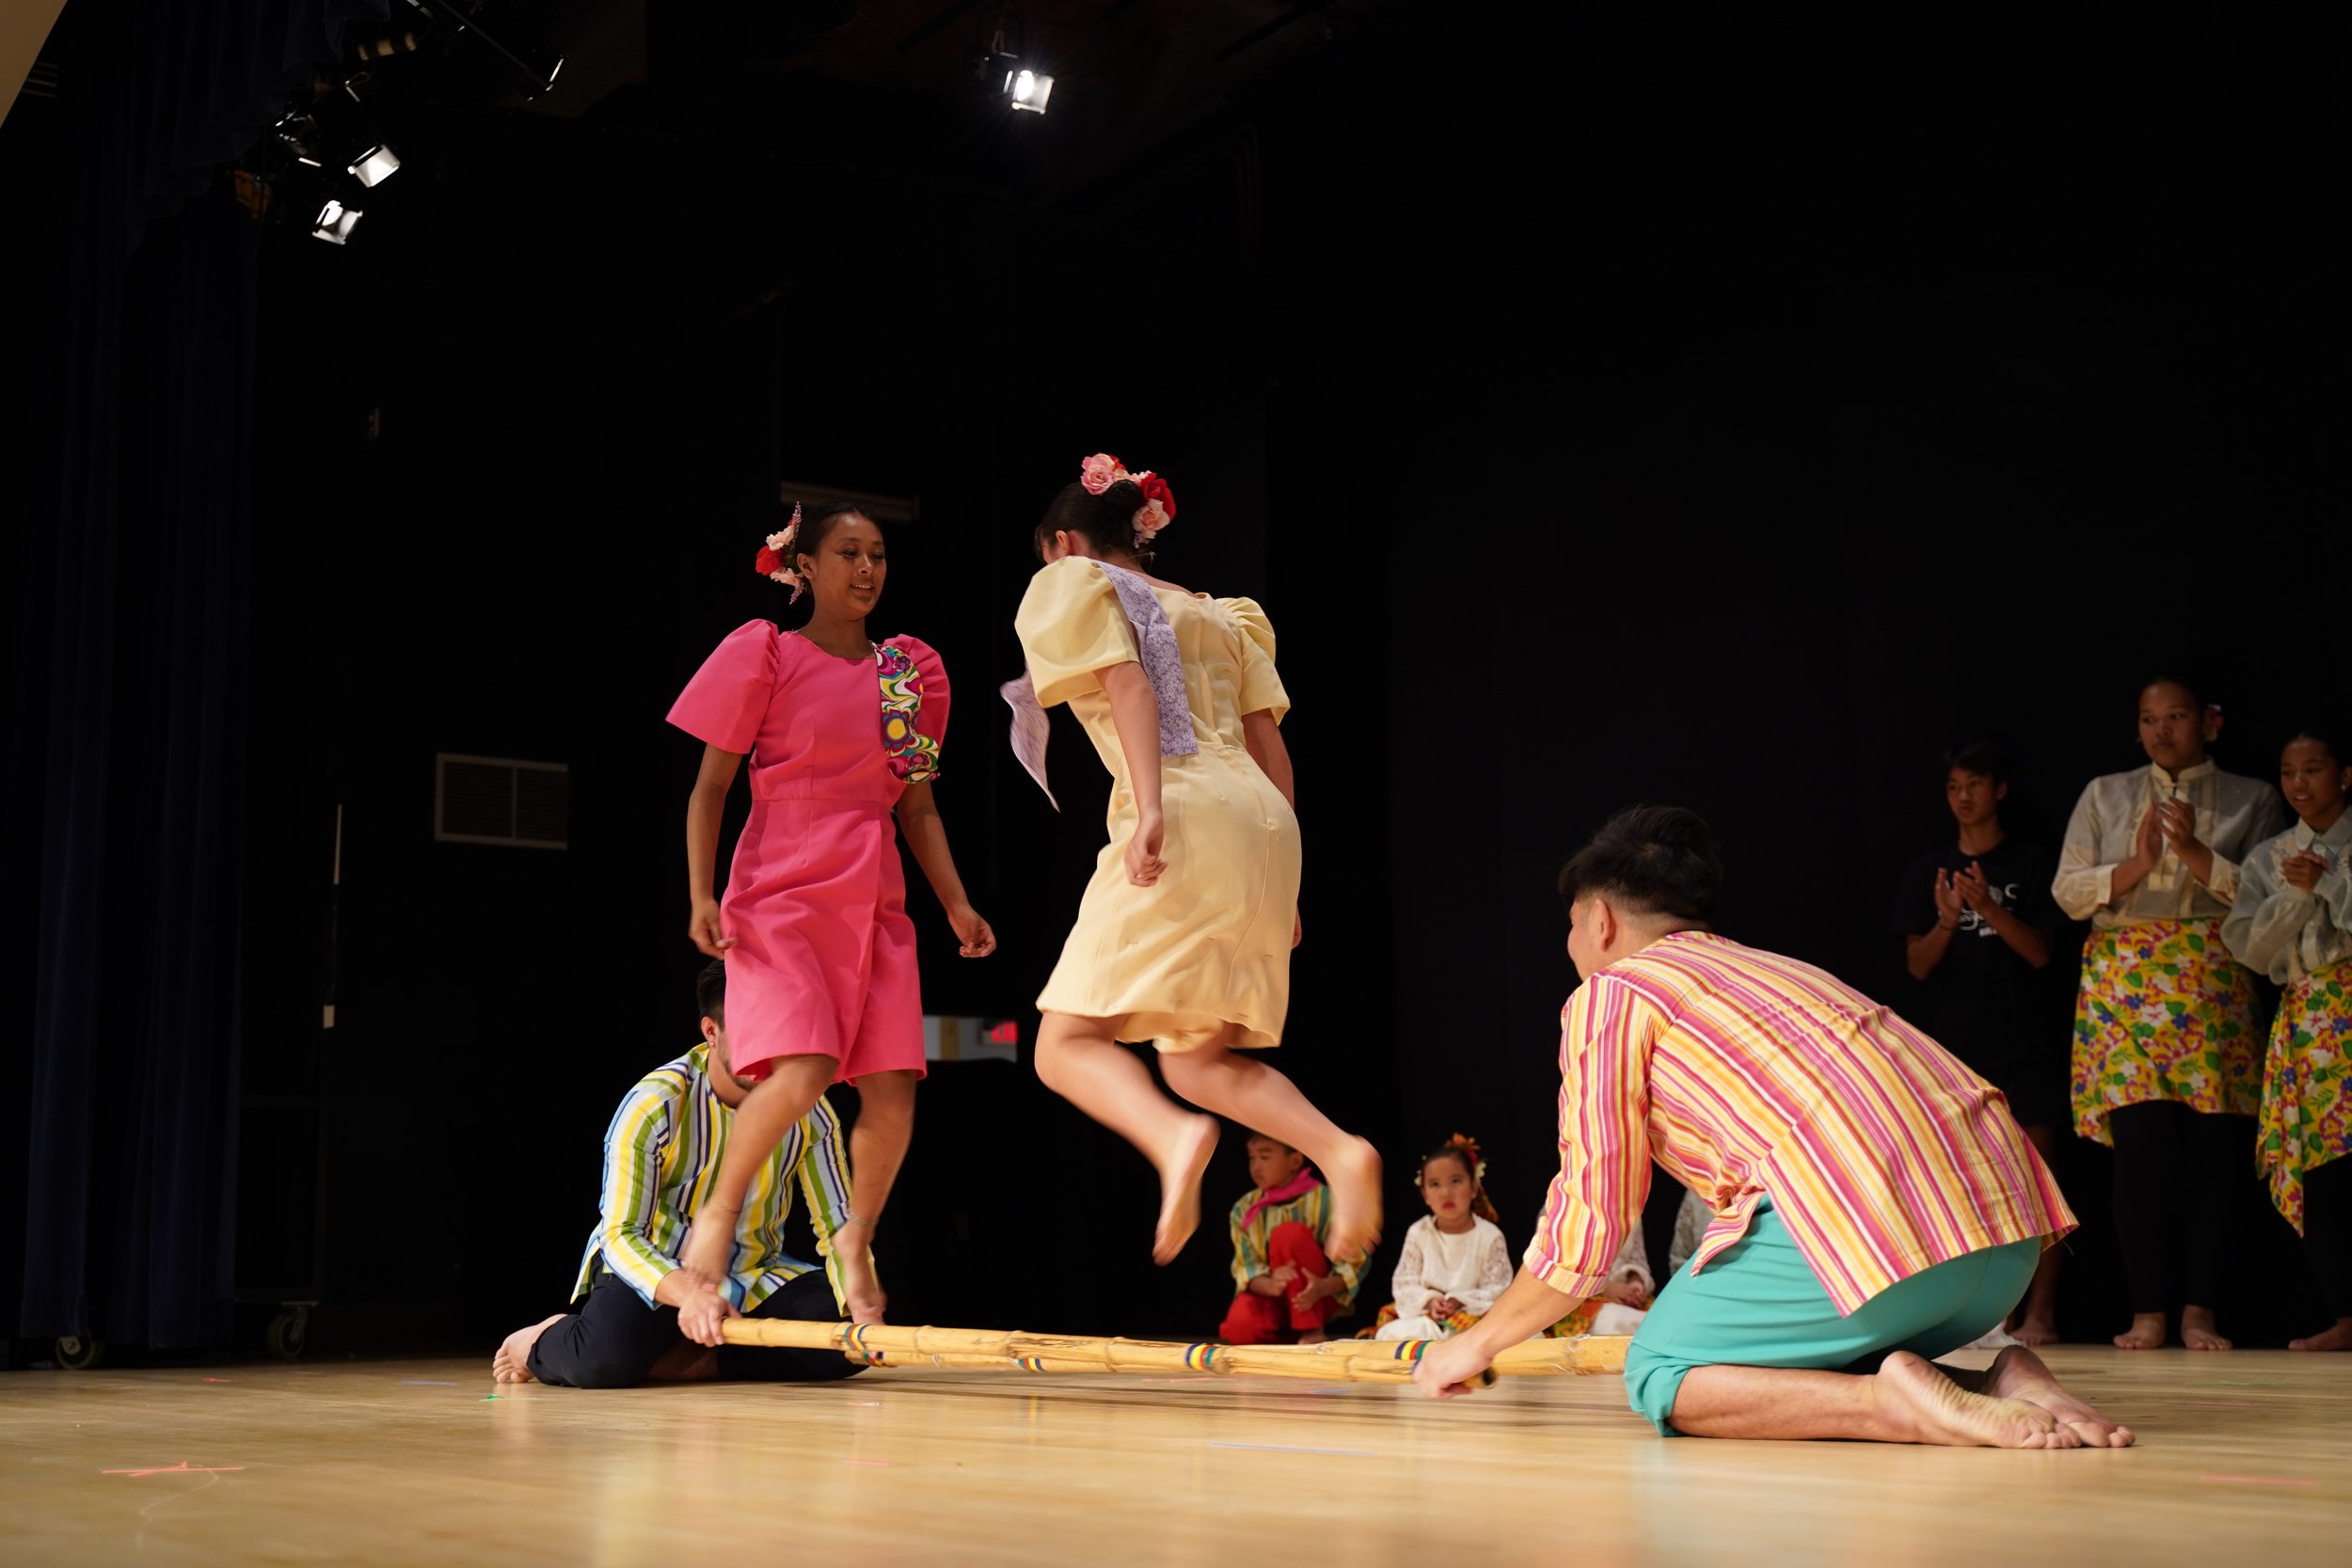  Agos youth performing at the Agos Spring 2023 Dance Recital at Oakland Asian Cultural Center. 